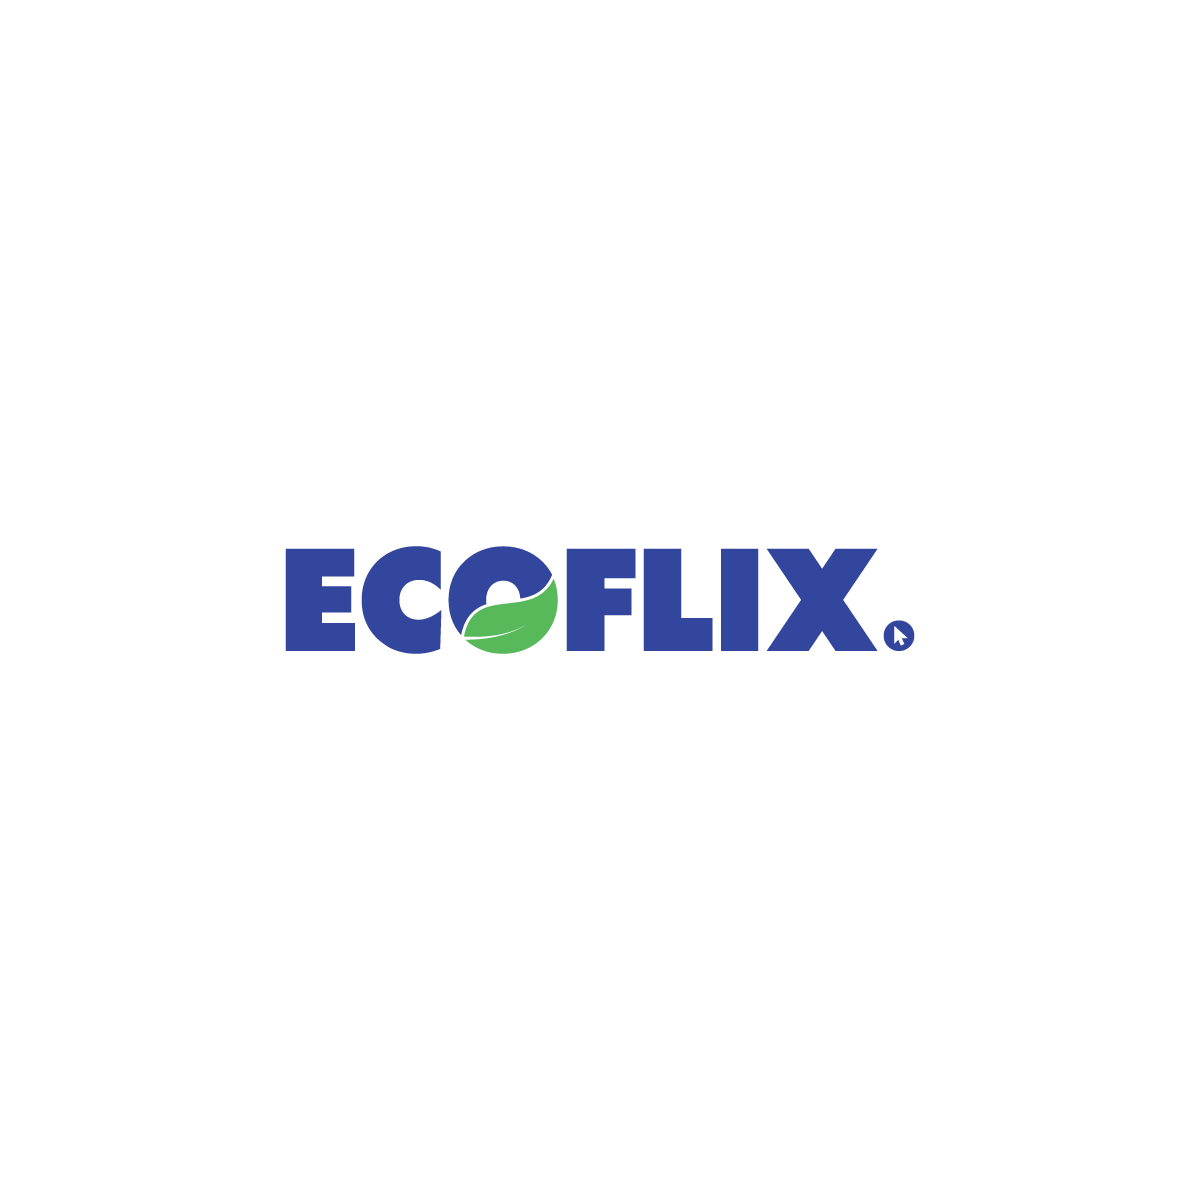 VEESION logos_Ecoflix